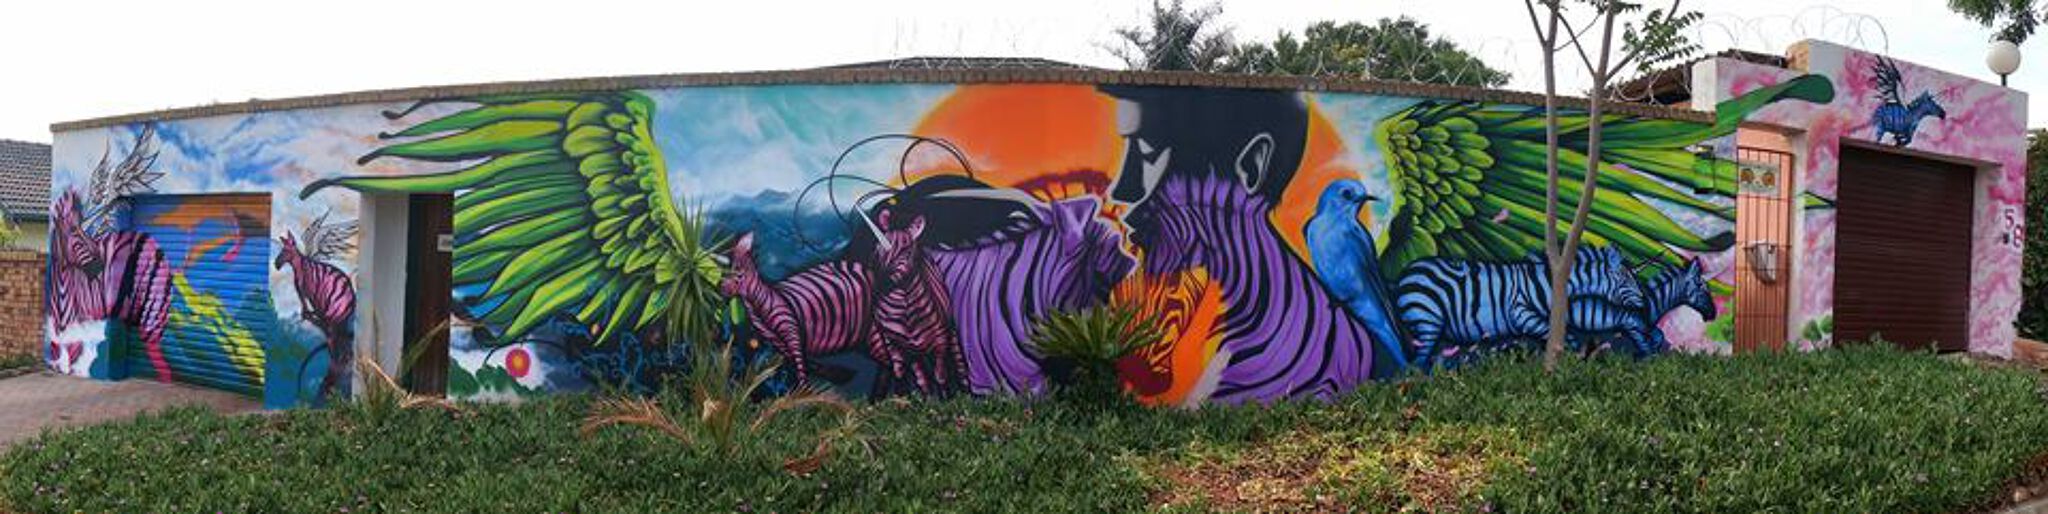 Prefix66&mdash;Zebras - Westdene Graffiti Project